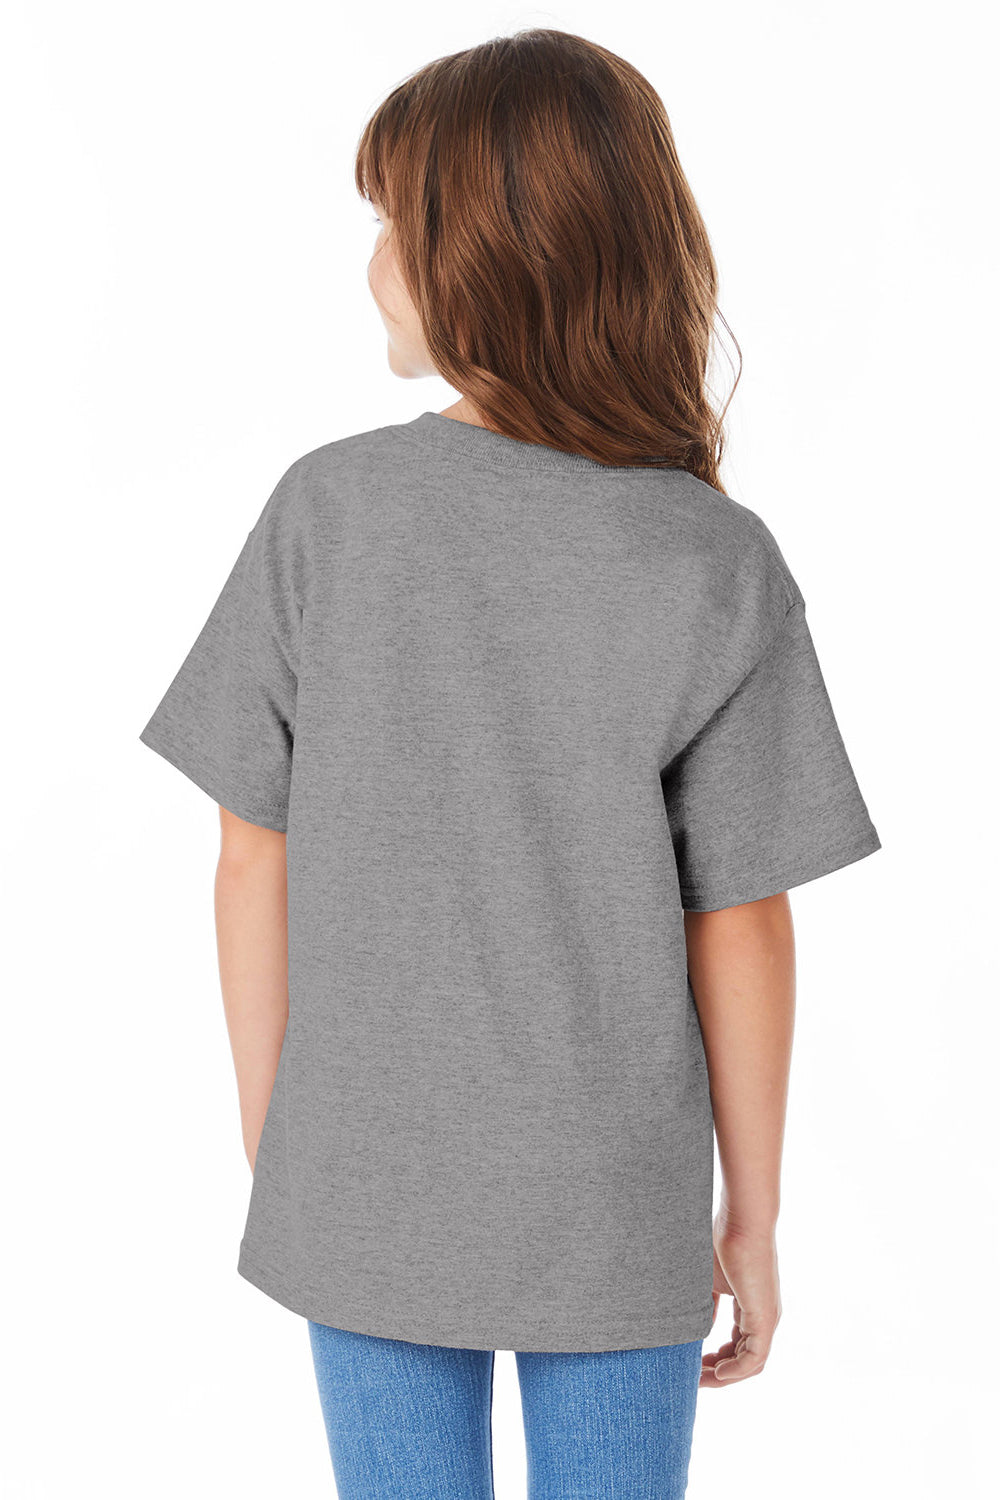 Hanes 5480 Youth ComfortSoft Short Sleeve Crewneck T-Shirt Oxford Grey Back